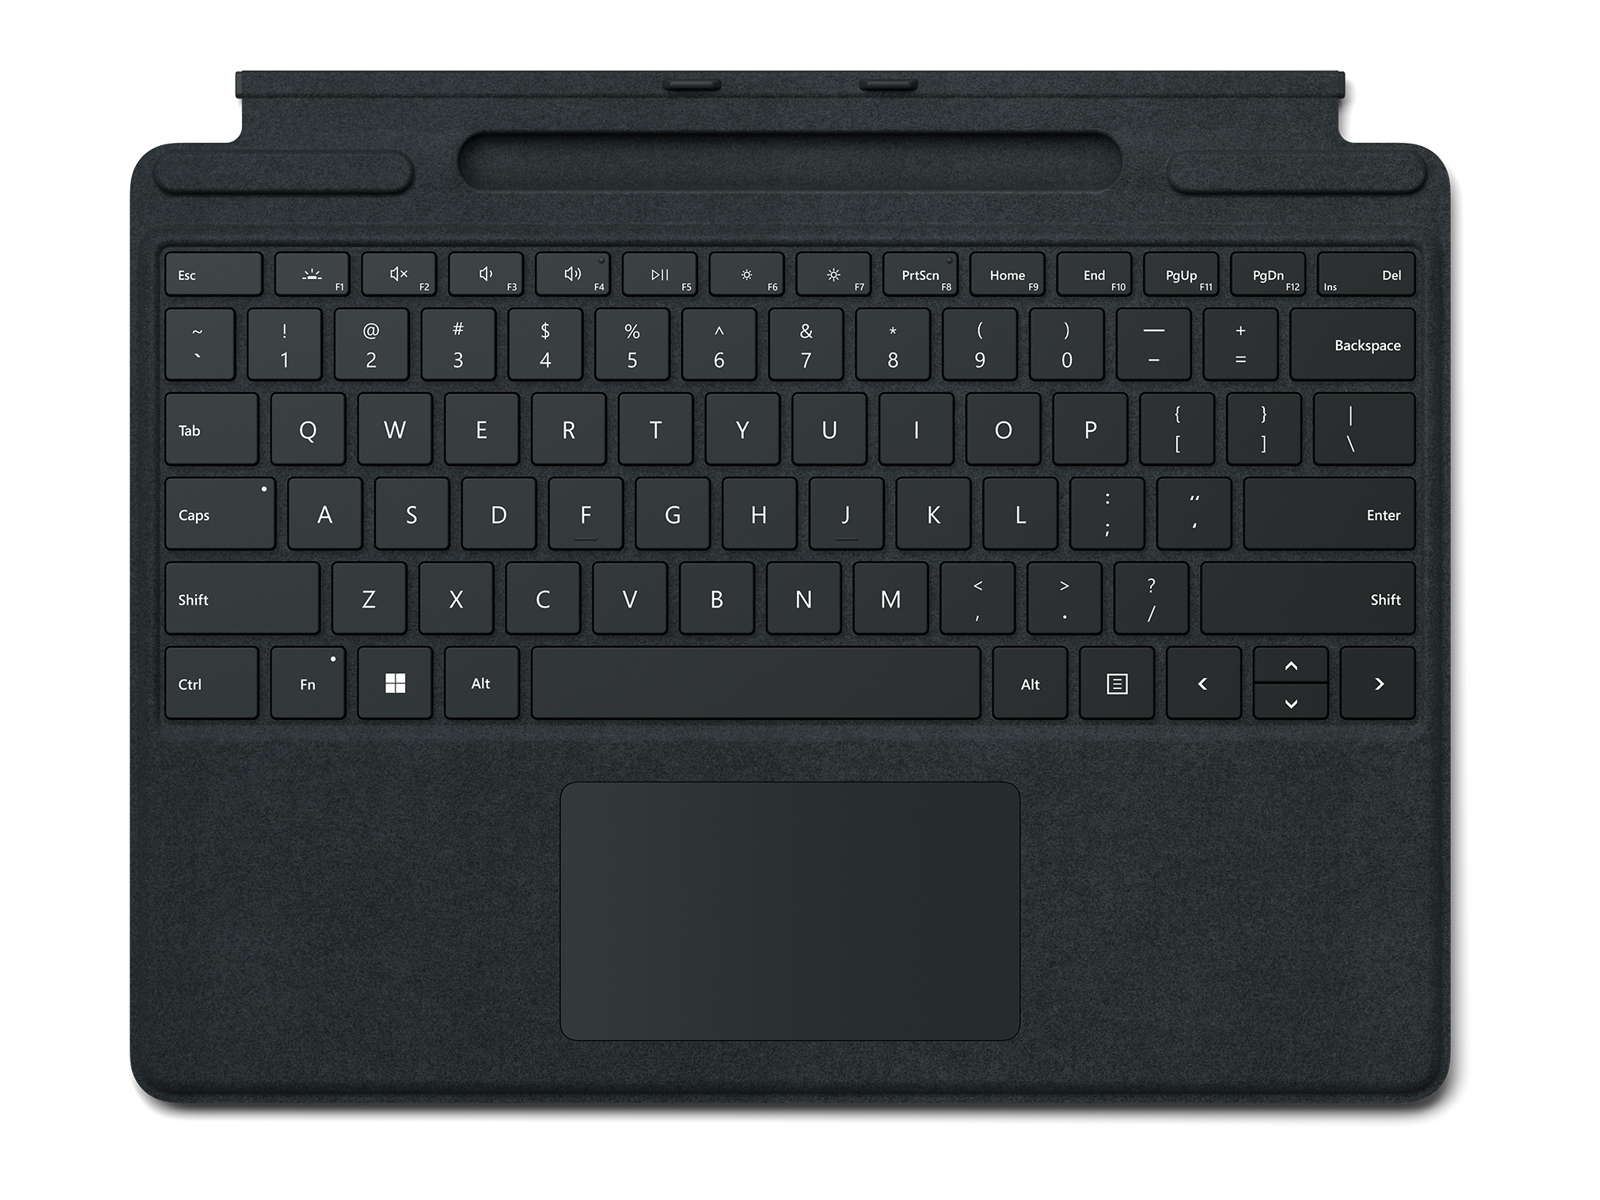 Microsoft Surface Pro Signature Keyboard Black Microsoft Cover port QWERTY Portuguese